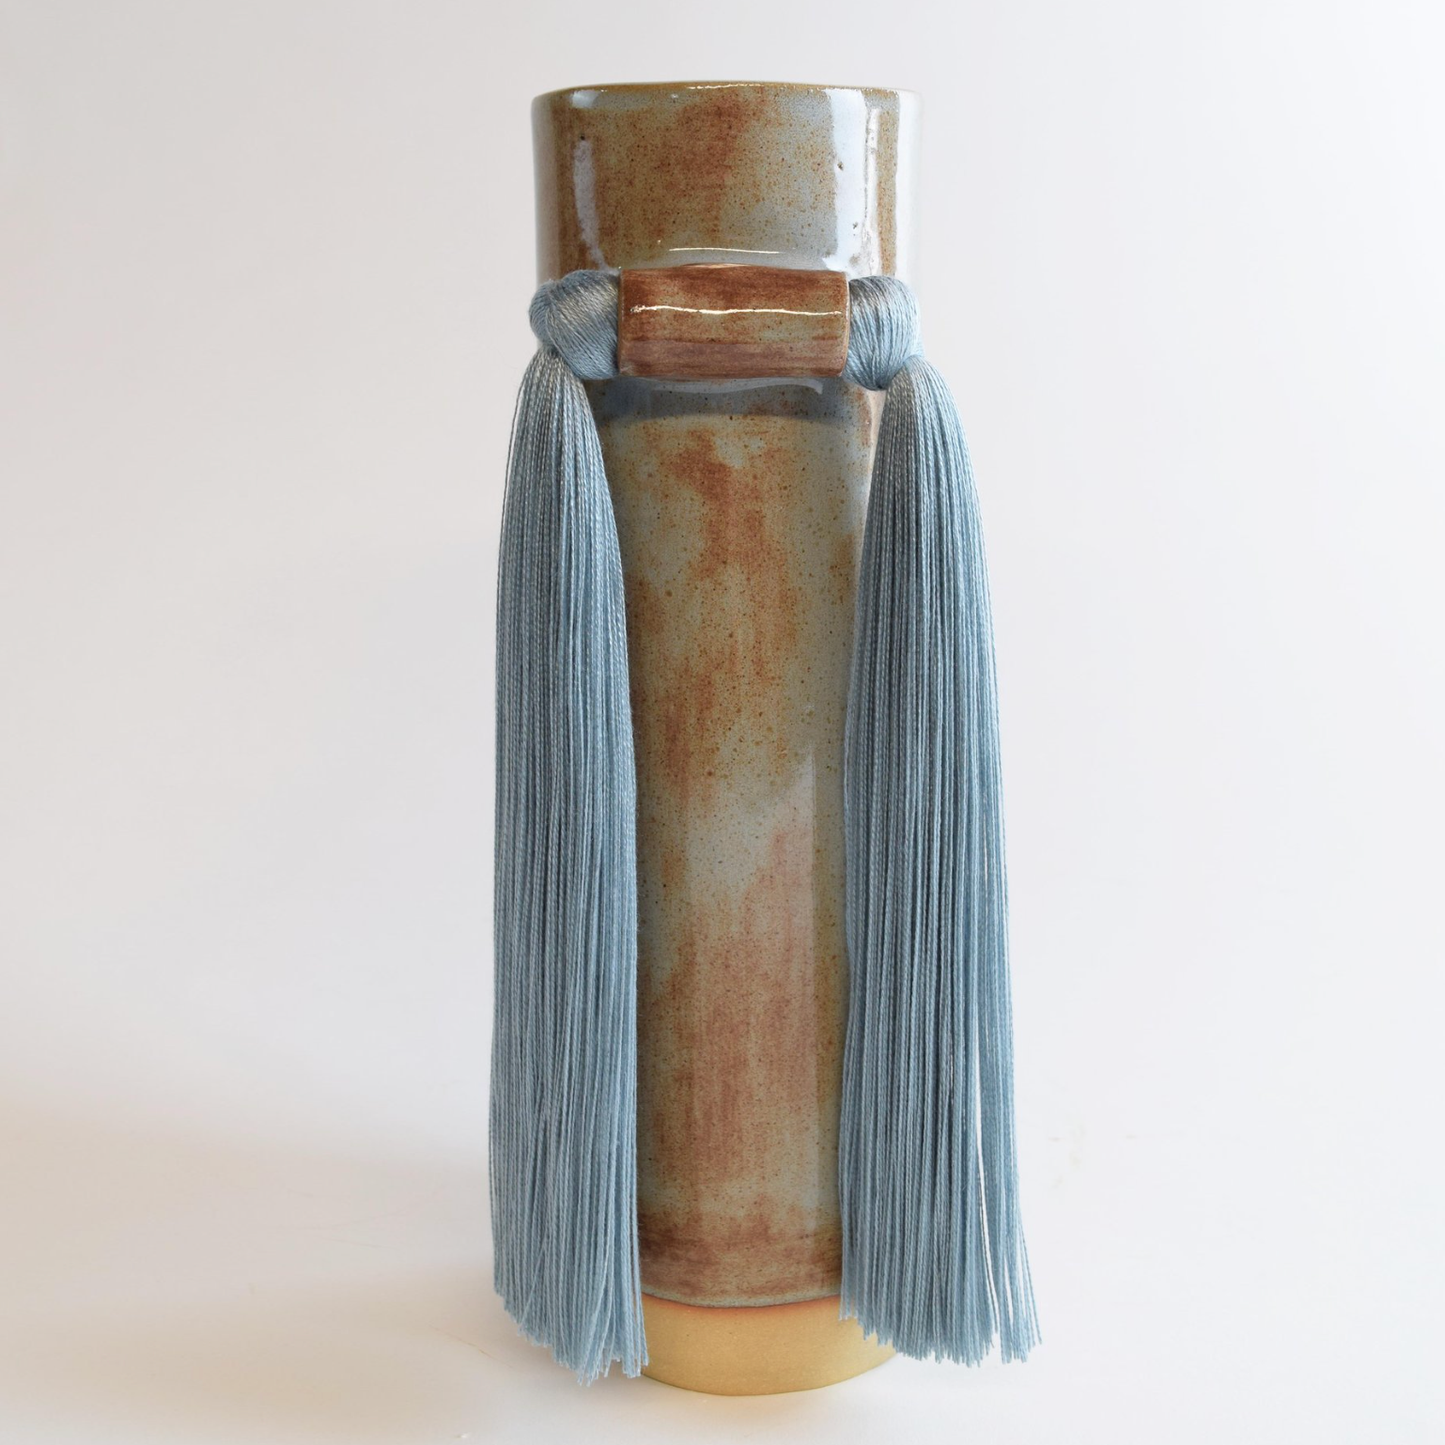 Vase 531 by Karen Gayle Tinney